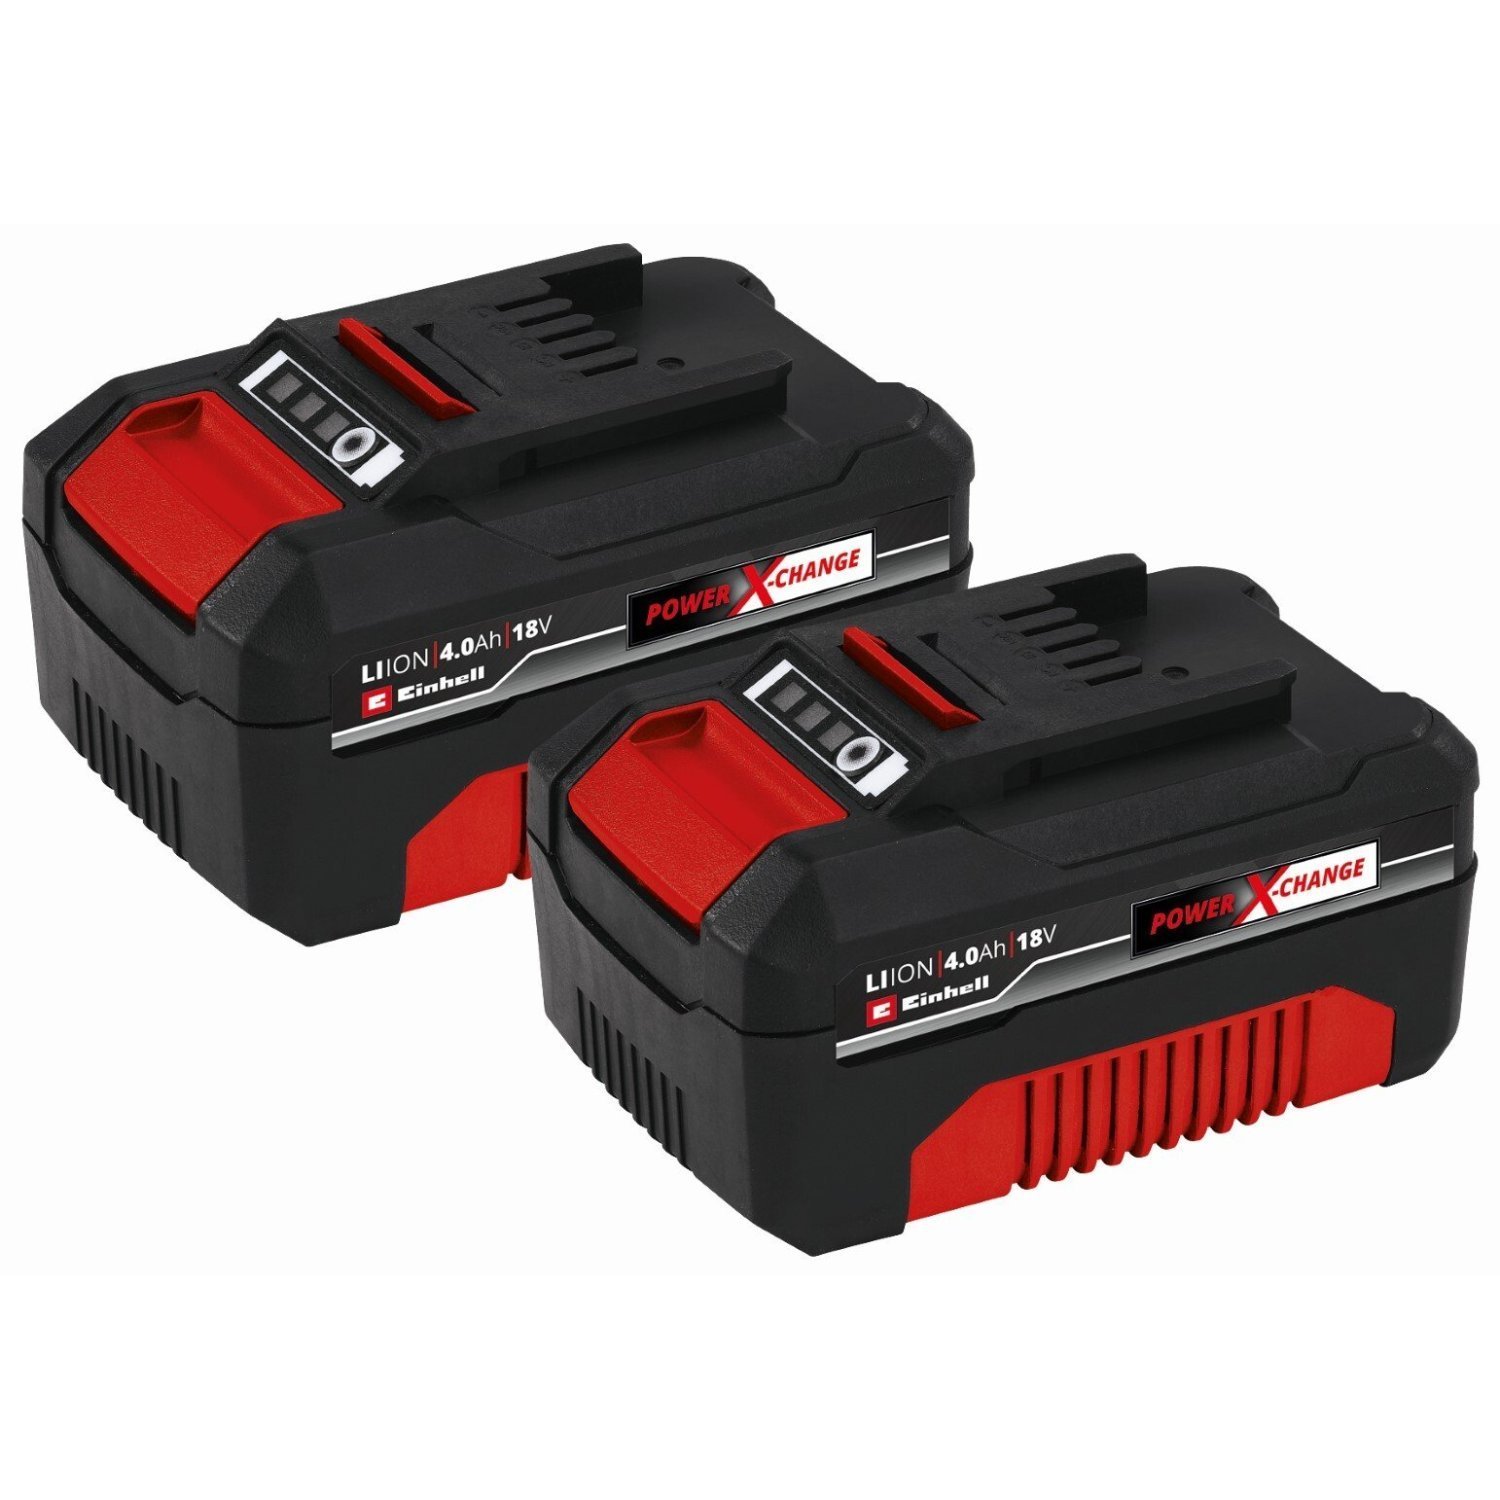 Kit Bateria Power X-Change 2 Unidades 18V 4,0ah Twinpack Einhell